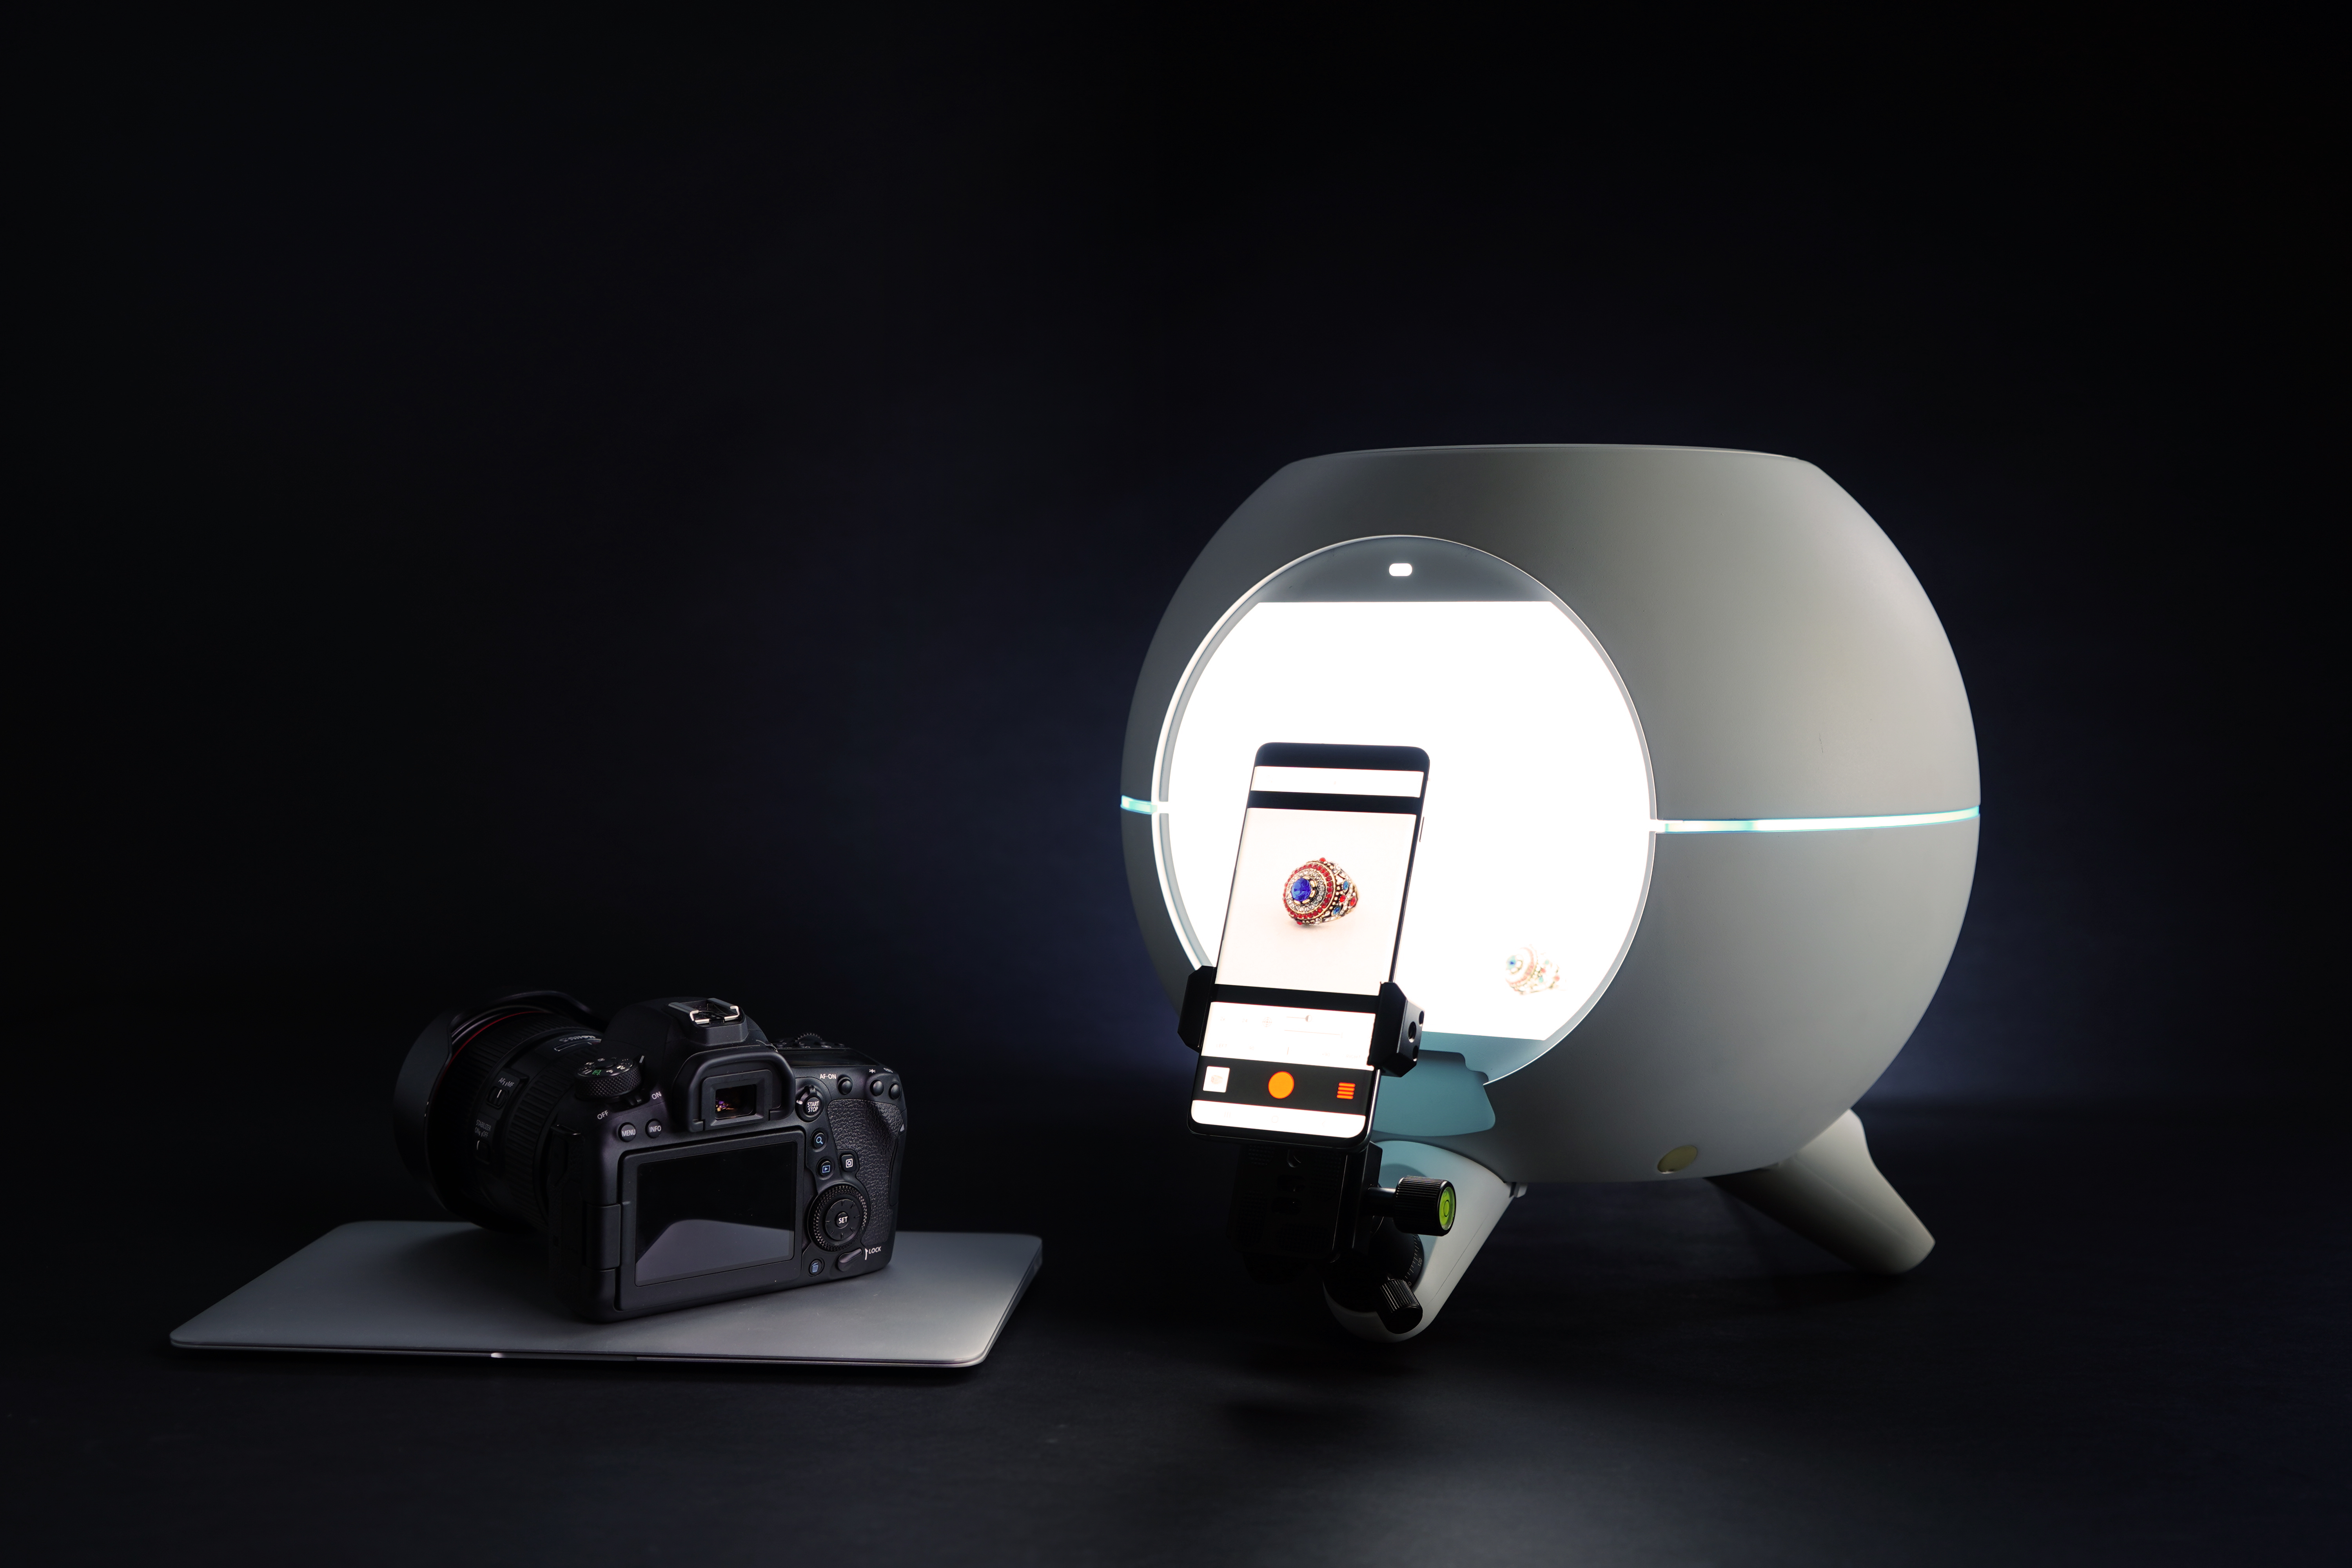 Orangemonkie’s New Kickstarter Campaign, the Foldio360 Smart Dome Finally Launches